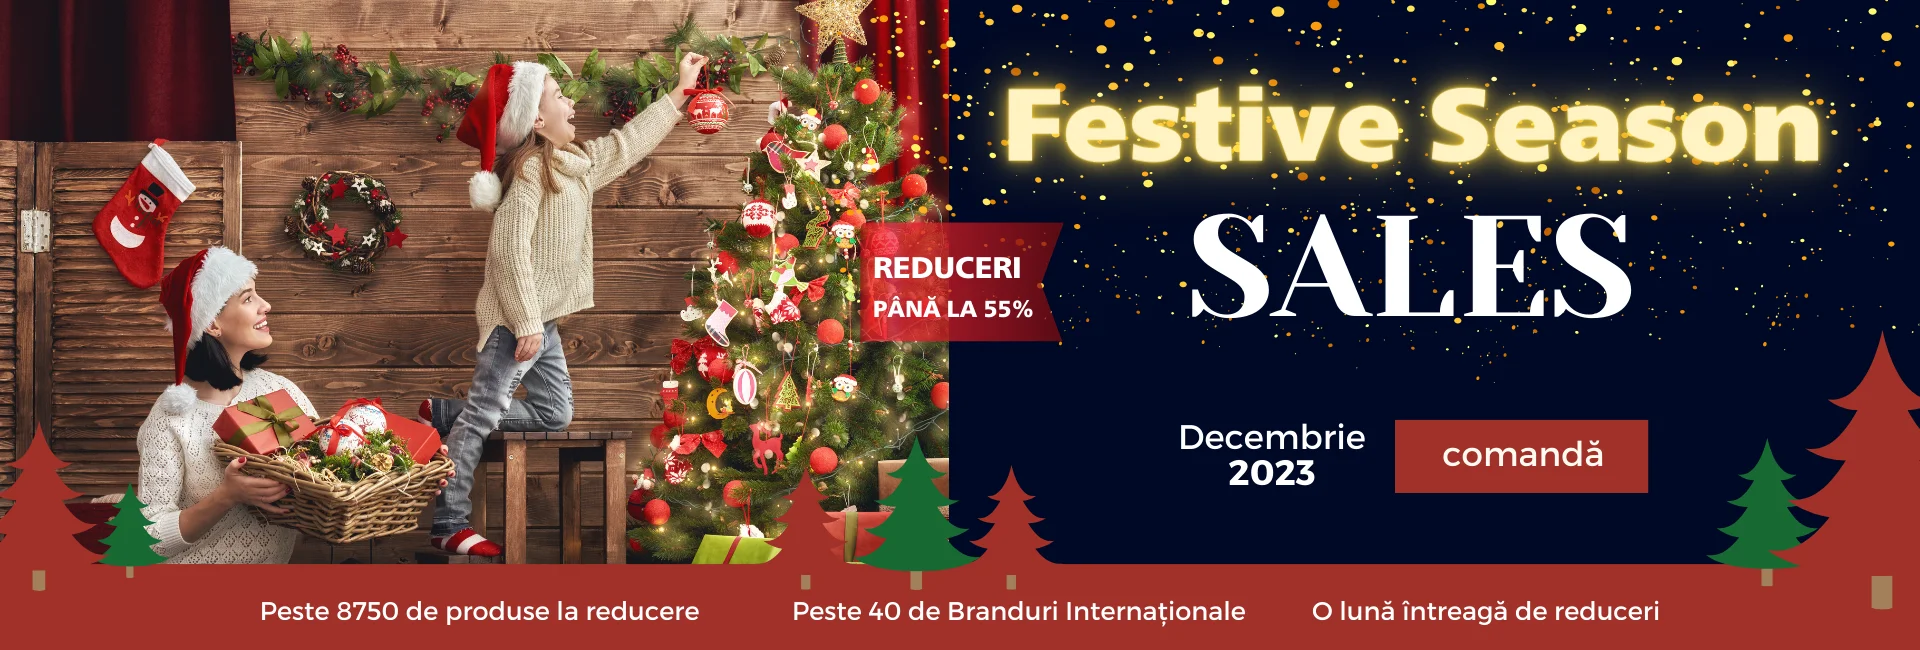 festive season sales etbm.ro 2023